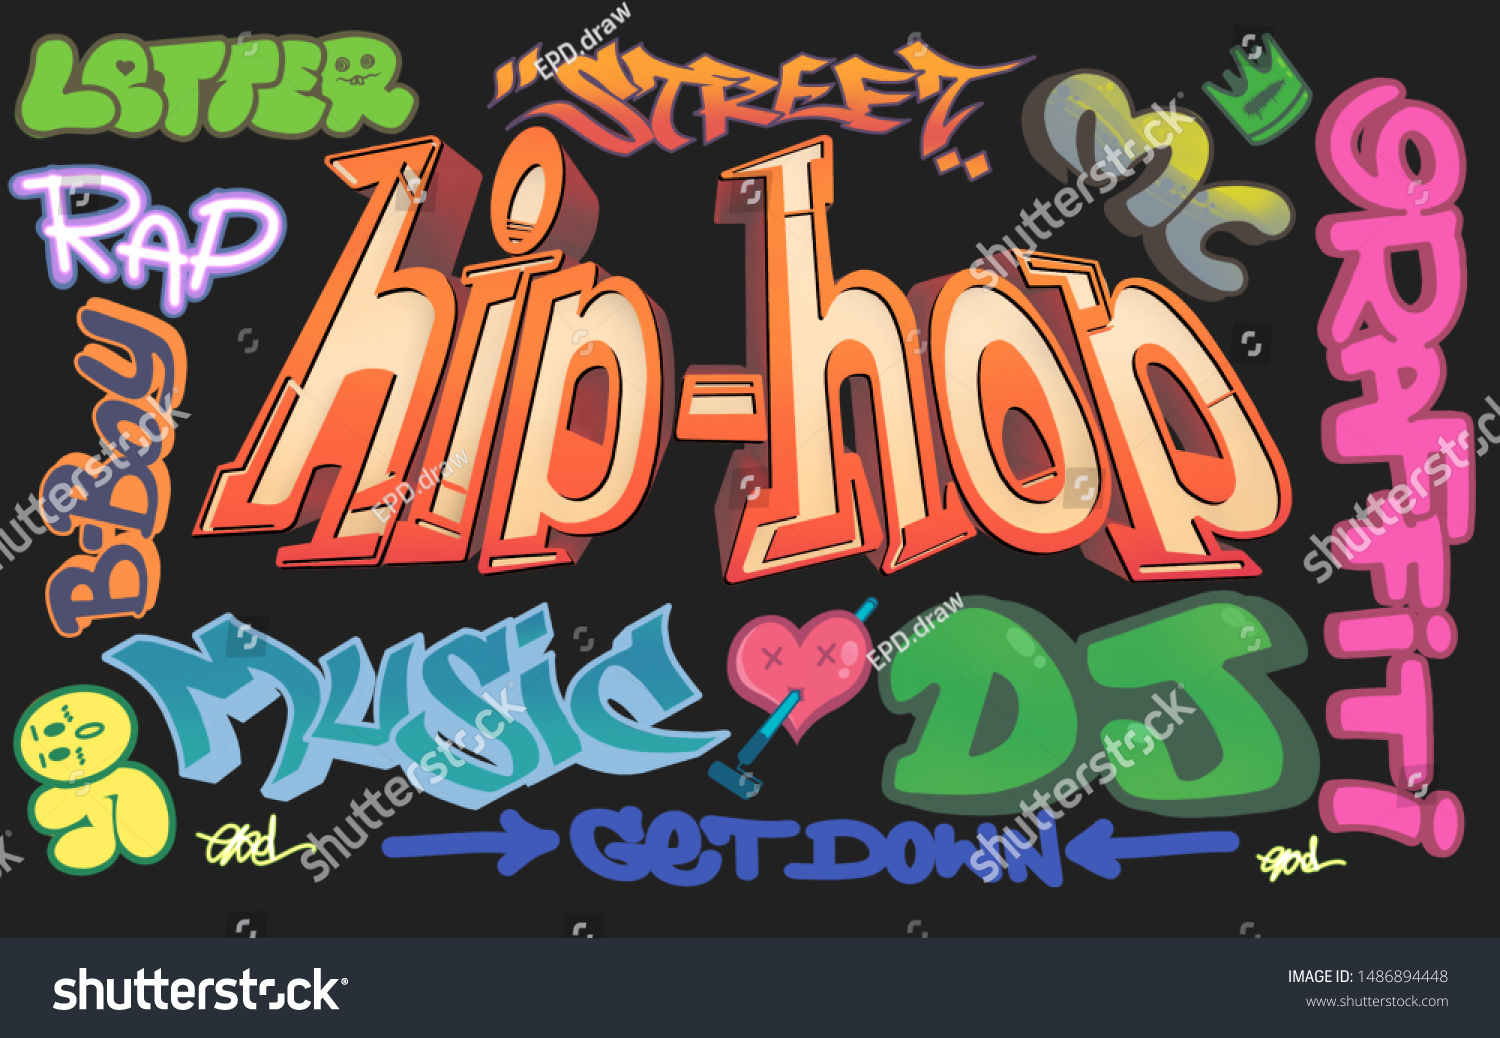 Hiphop Graffiti Streetart Rap Song Hiphop Stock Illustration 1486894448